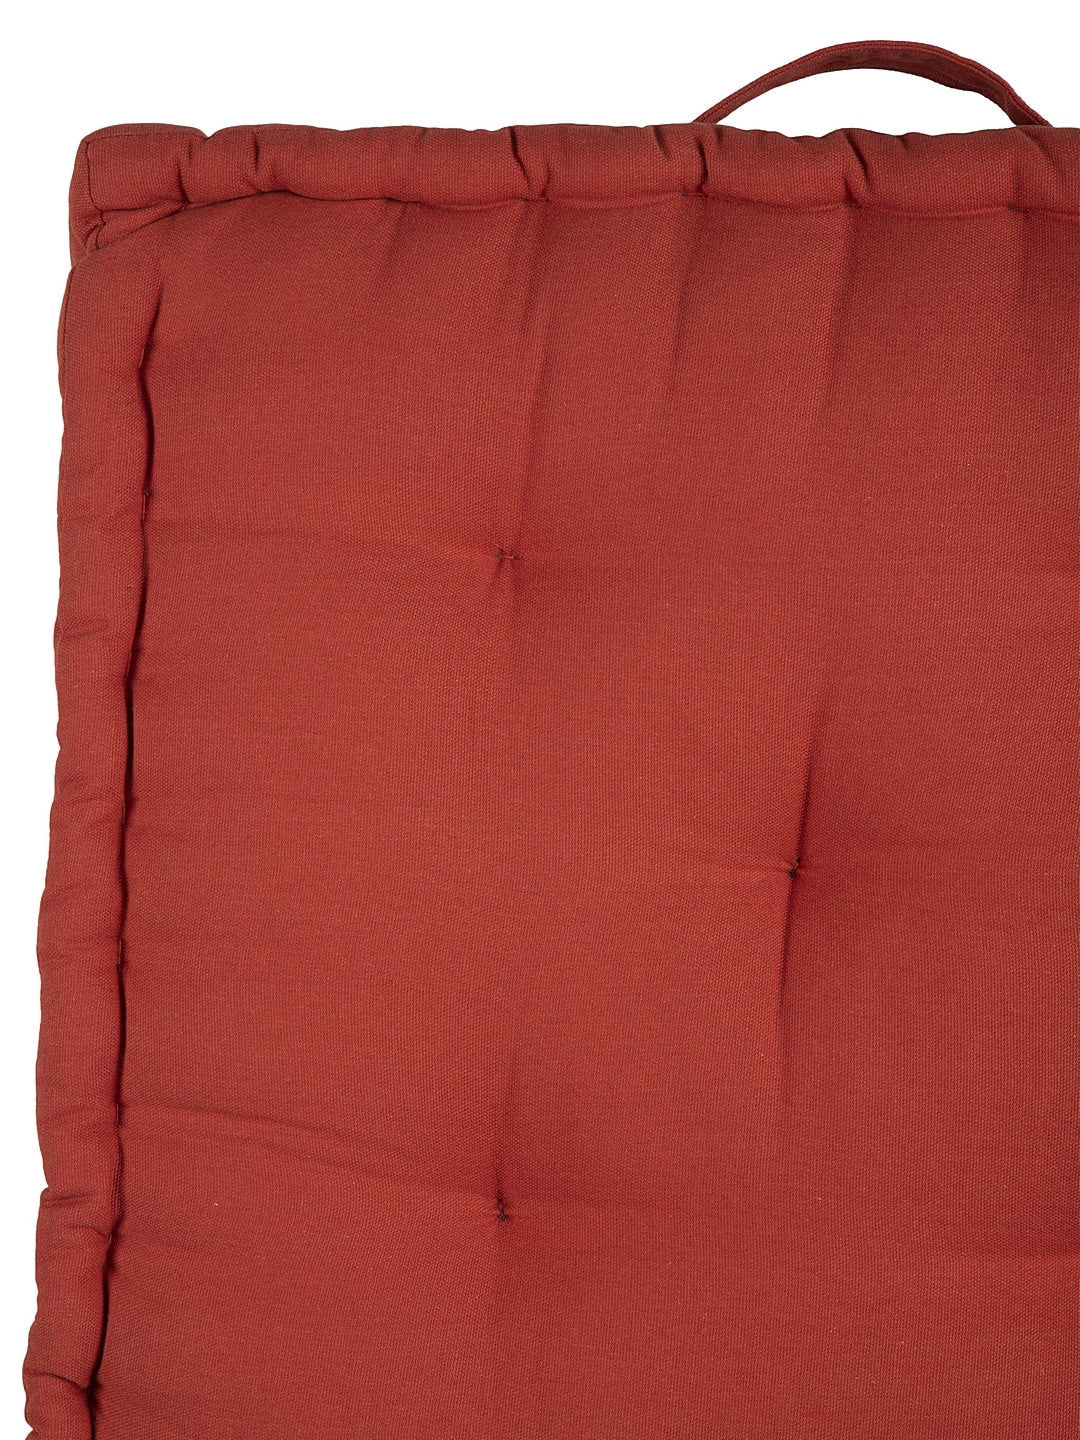 Blanc9 Crimson Matlas Floor Cushion